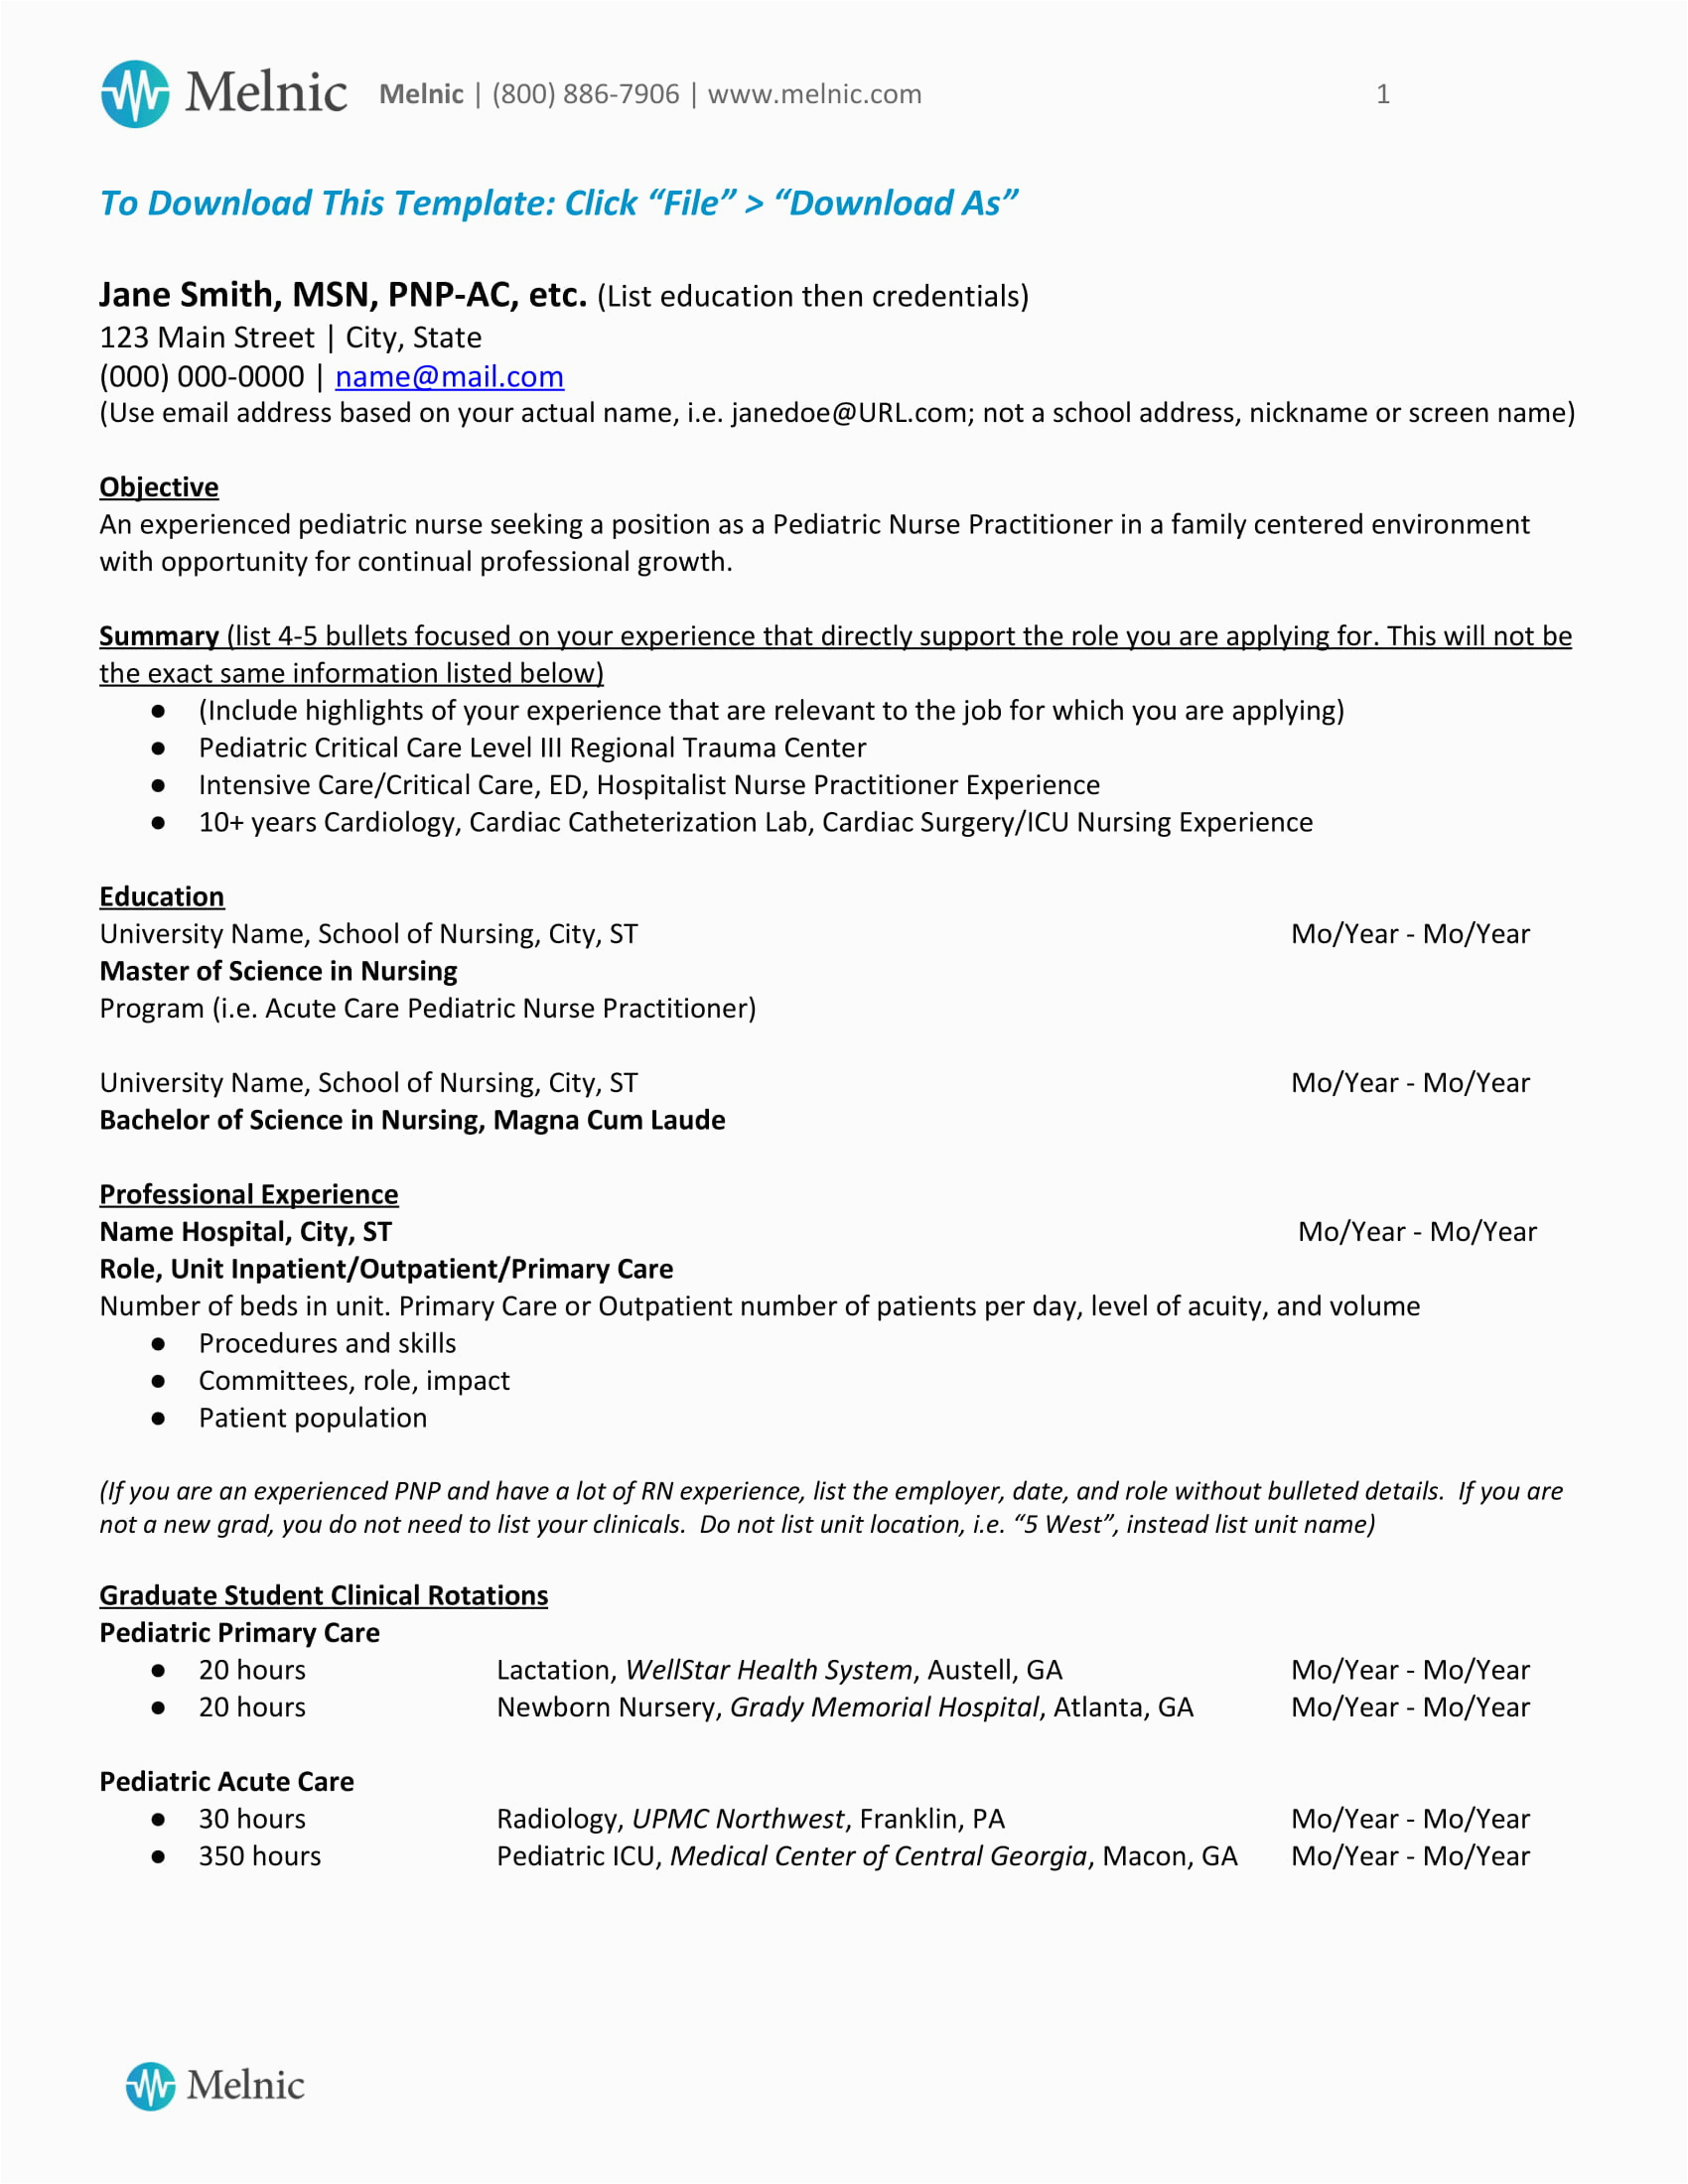 Sample Resume for Nurse Practitioner School Sample Nurse Practitioner Resume Mryn ism